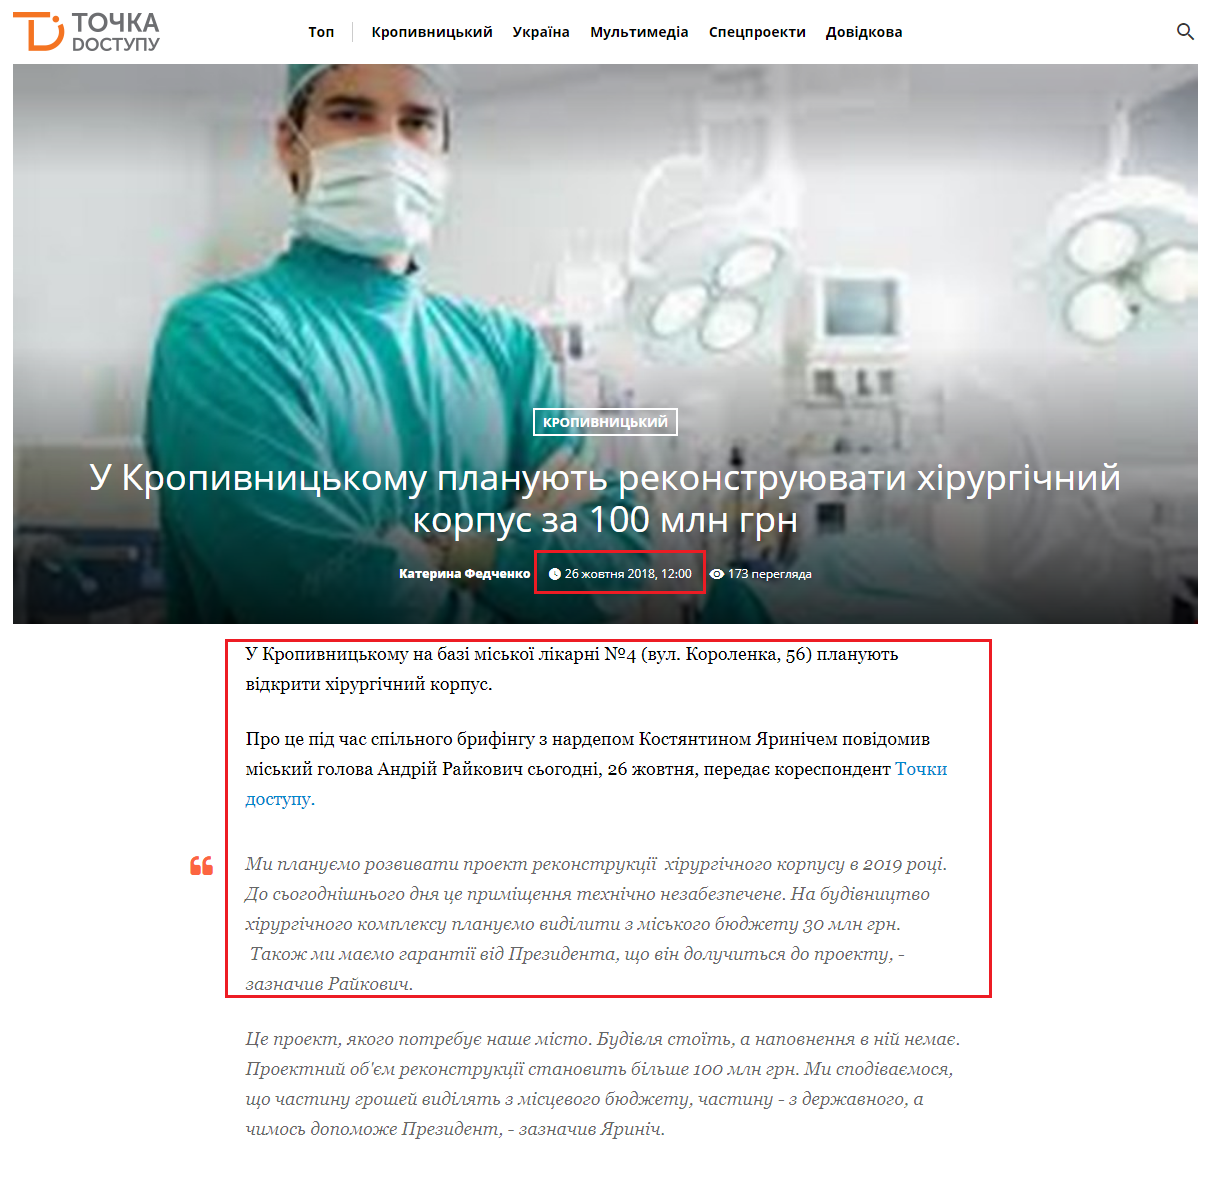 http://dostyp.com.ua/novini/u-kropivnits-komu-planuiut-riekonstruiuvati-khirurghichnii-korpus-za-100-mln-ghrn